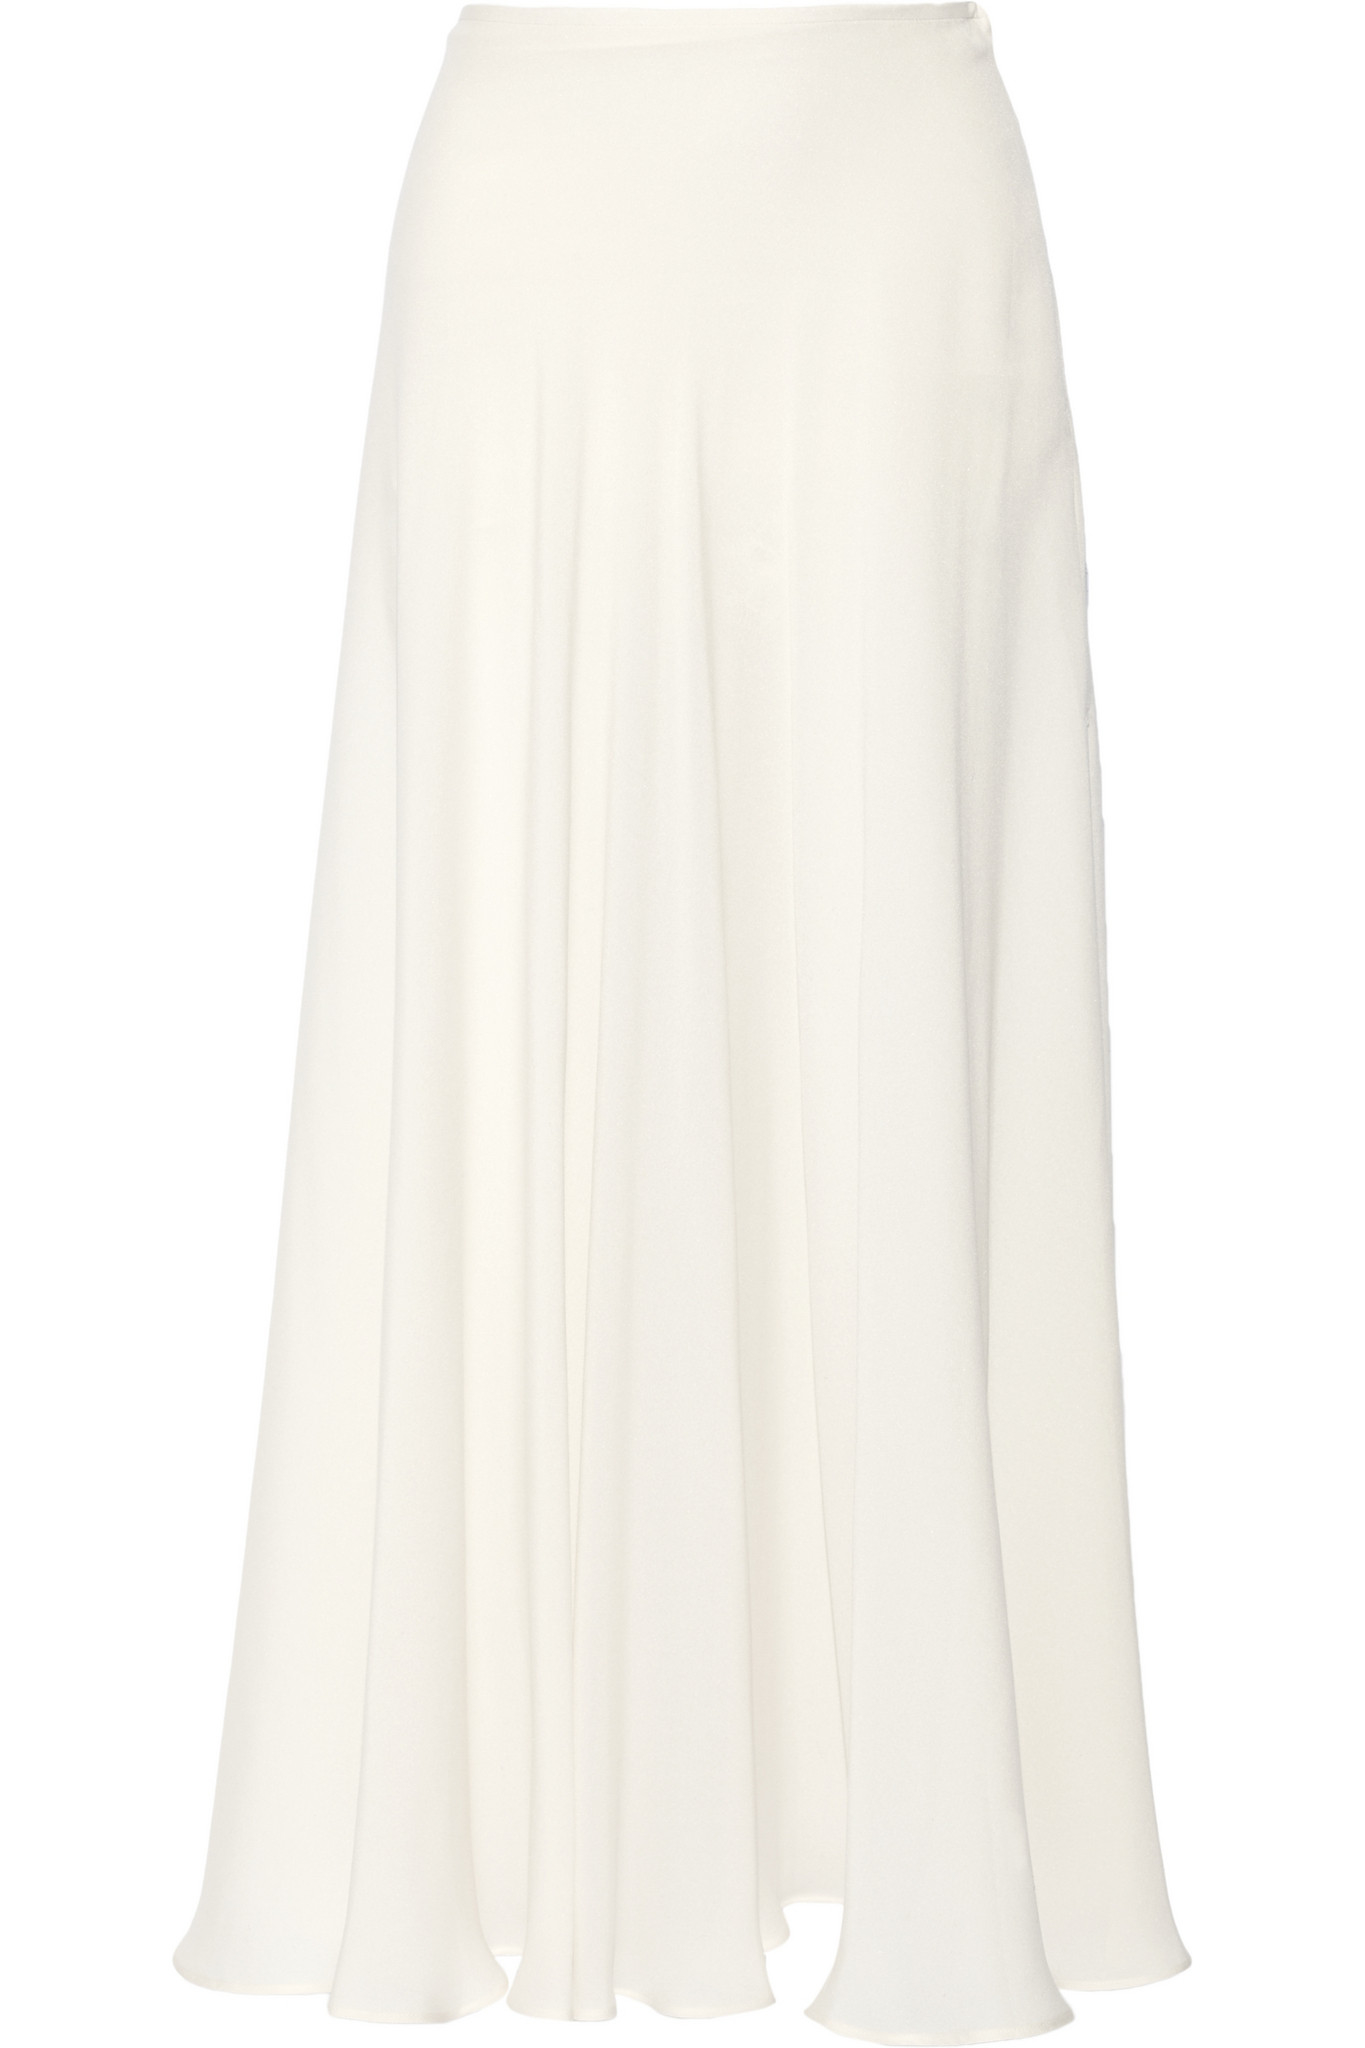 Elie Saab Silk-blend Crepe Maxi Skirt in White - Lyst